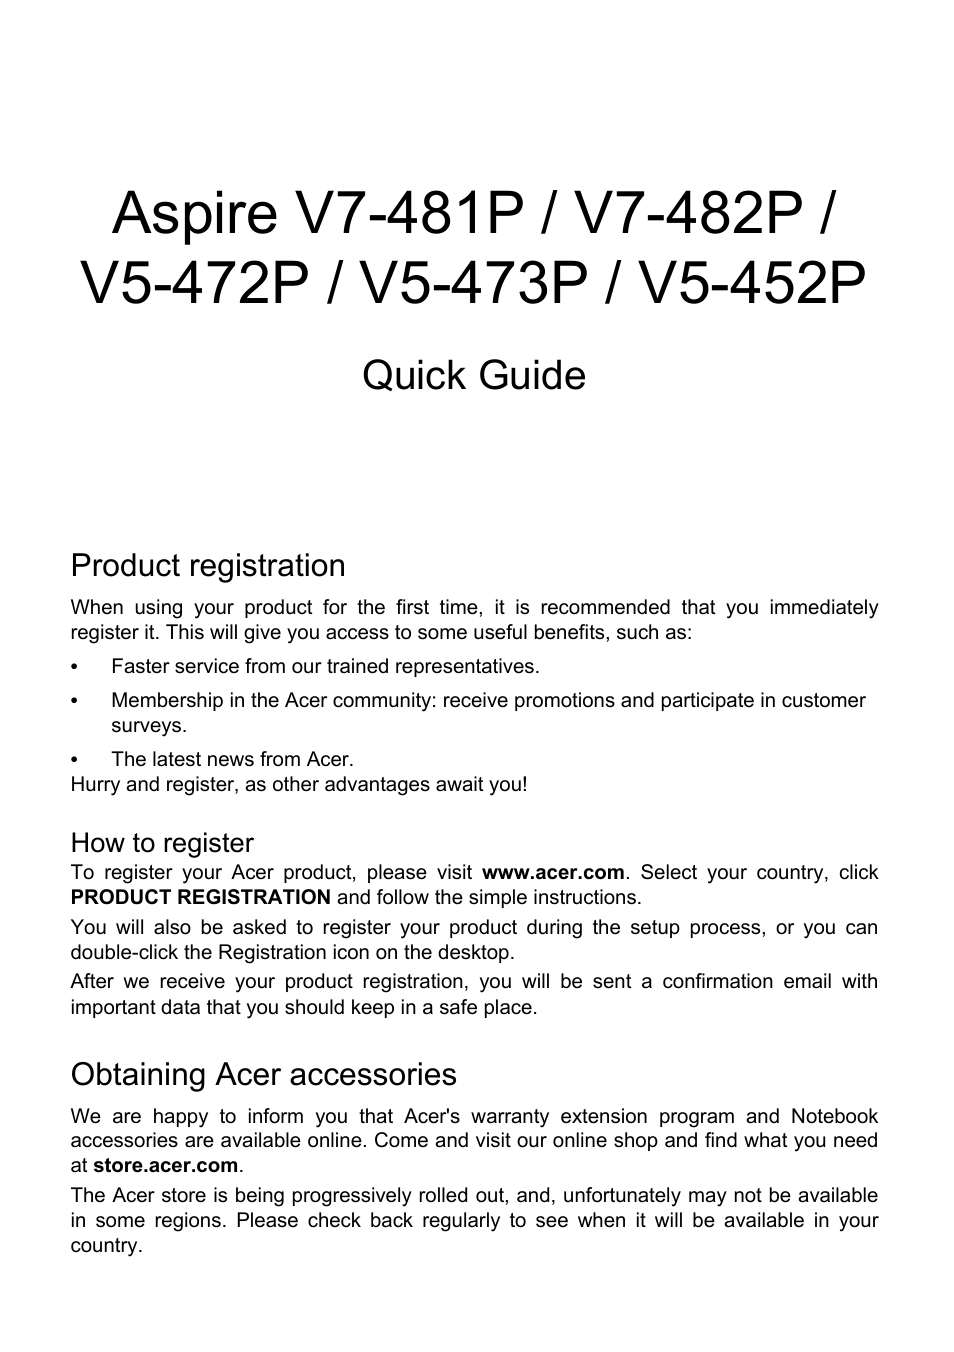 Aspire V5-472